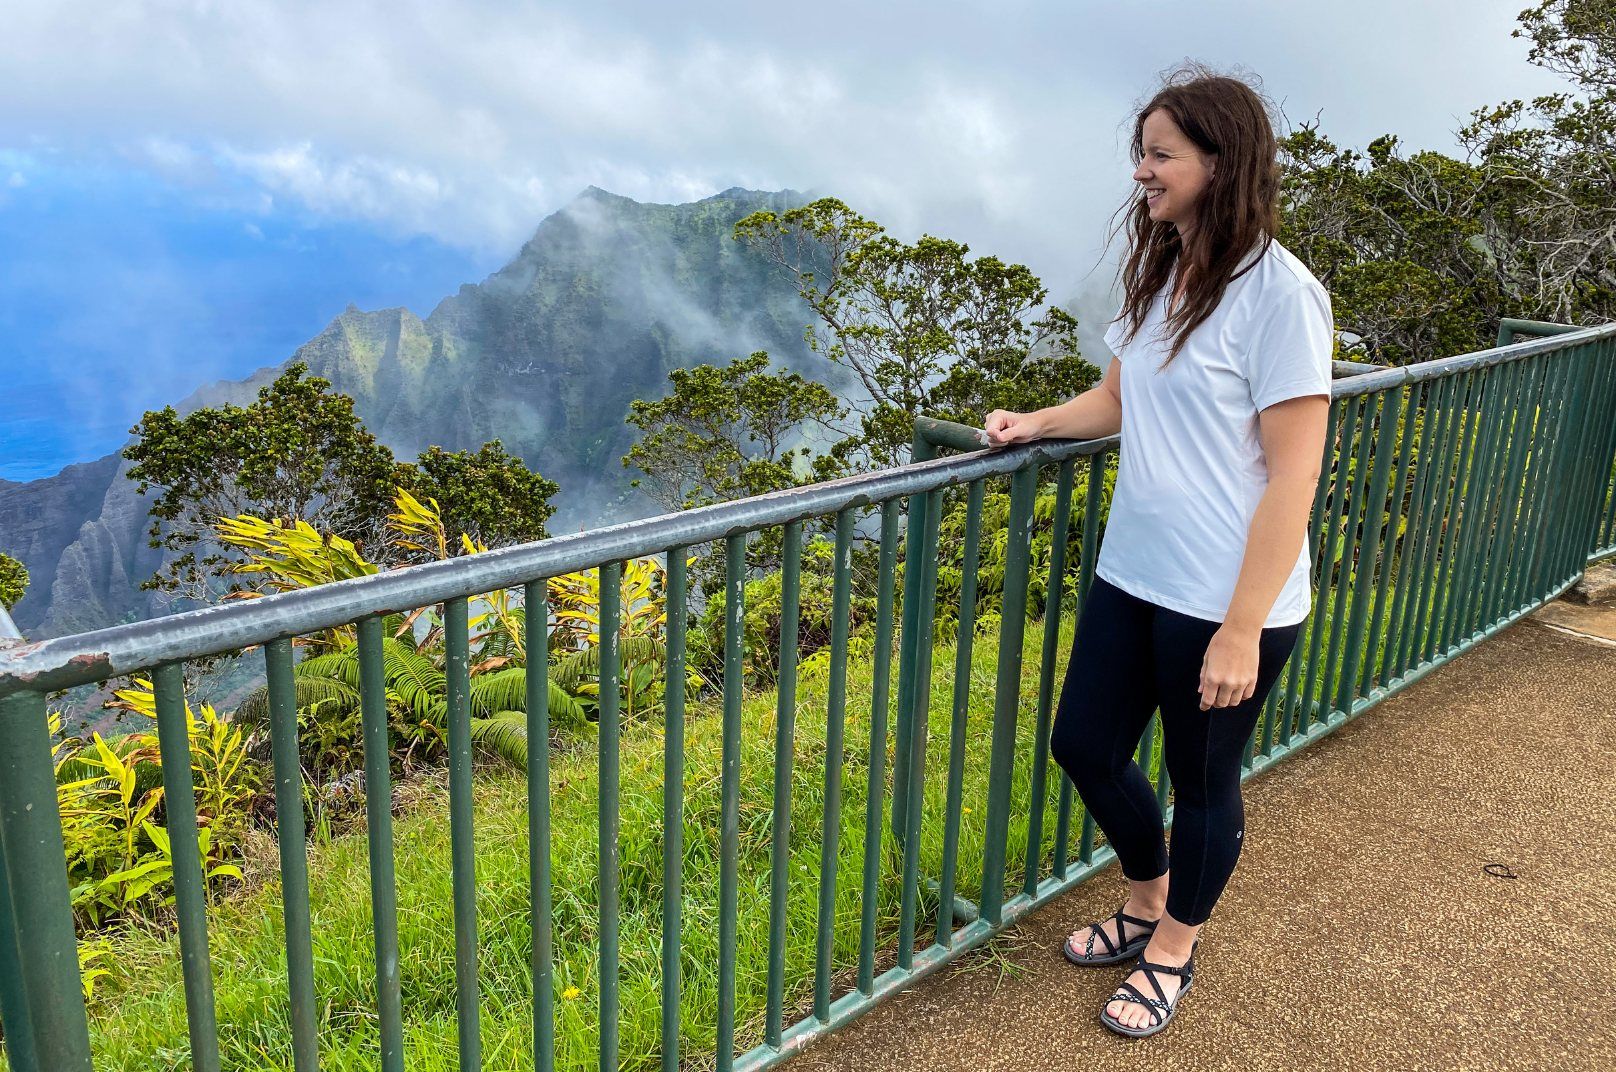 Kauai solo female travel guide